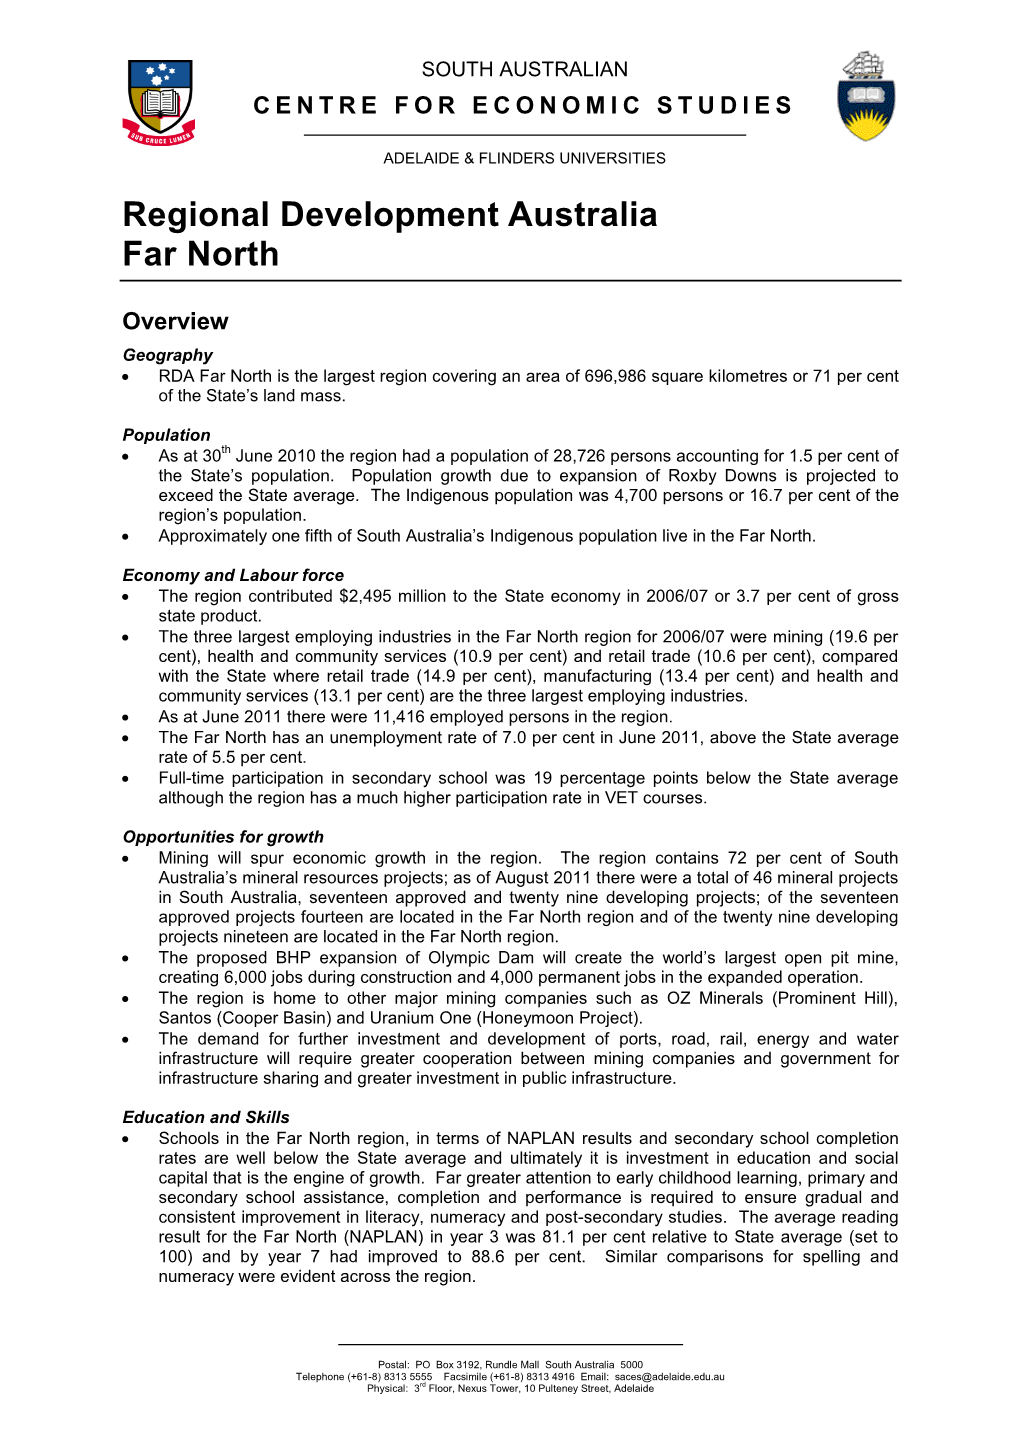 Regional Development Australia Far North